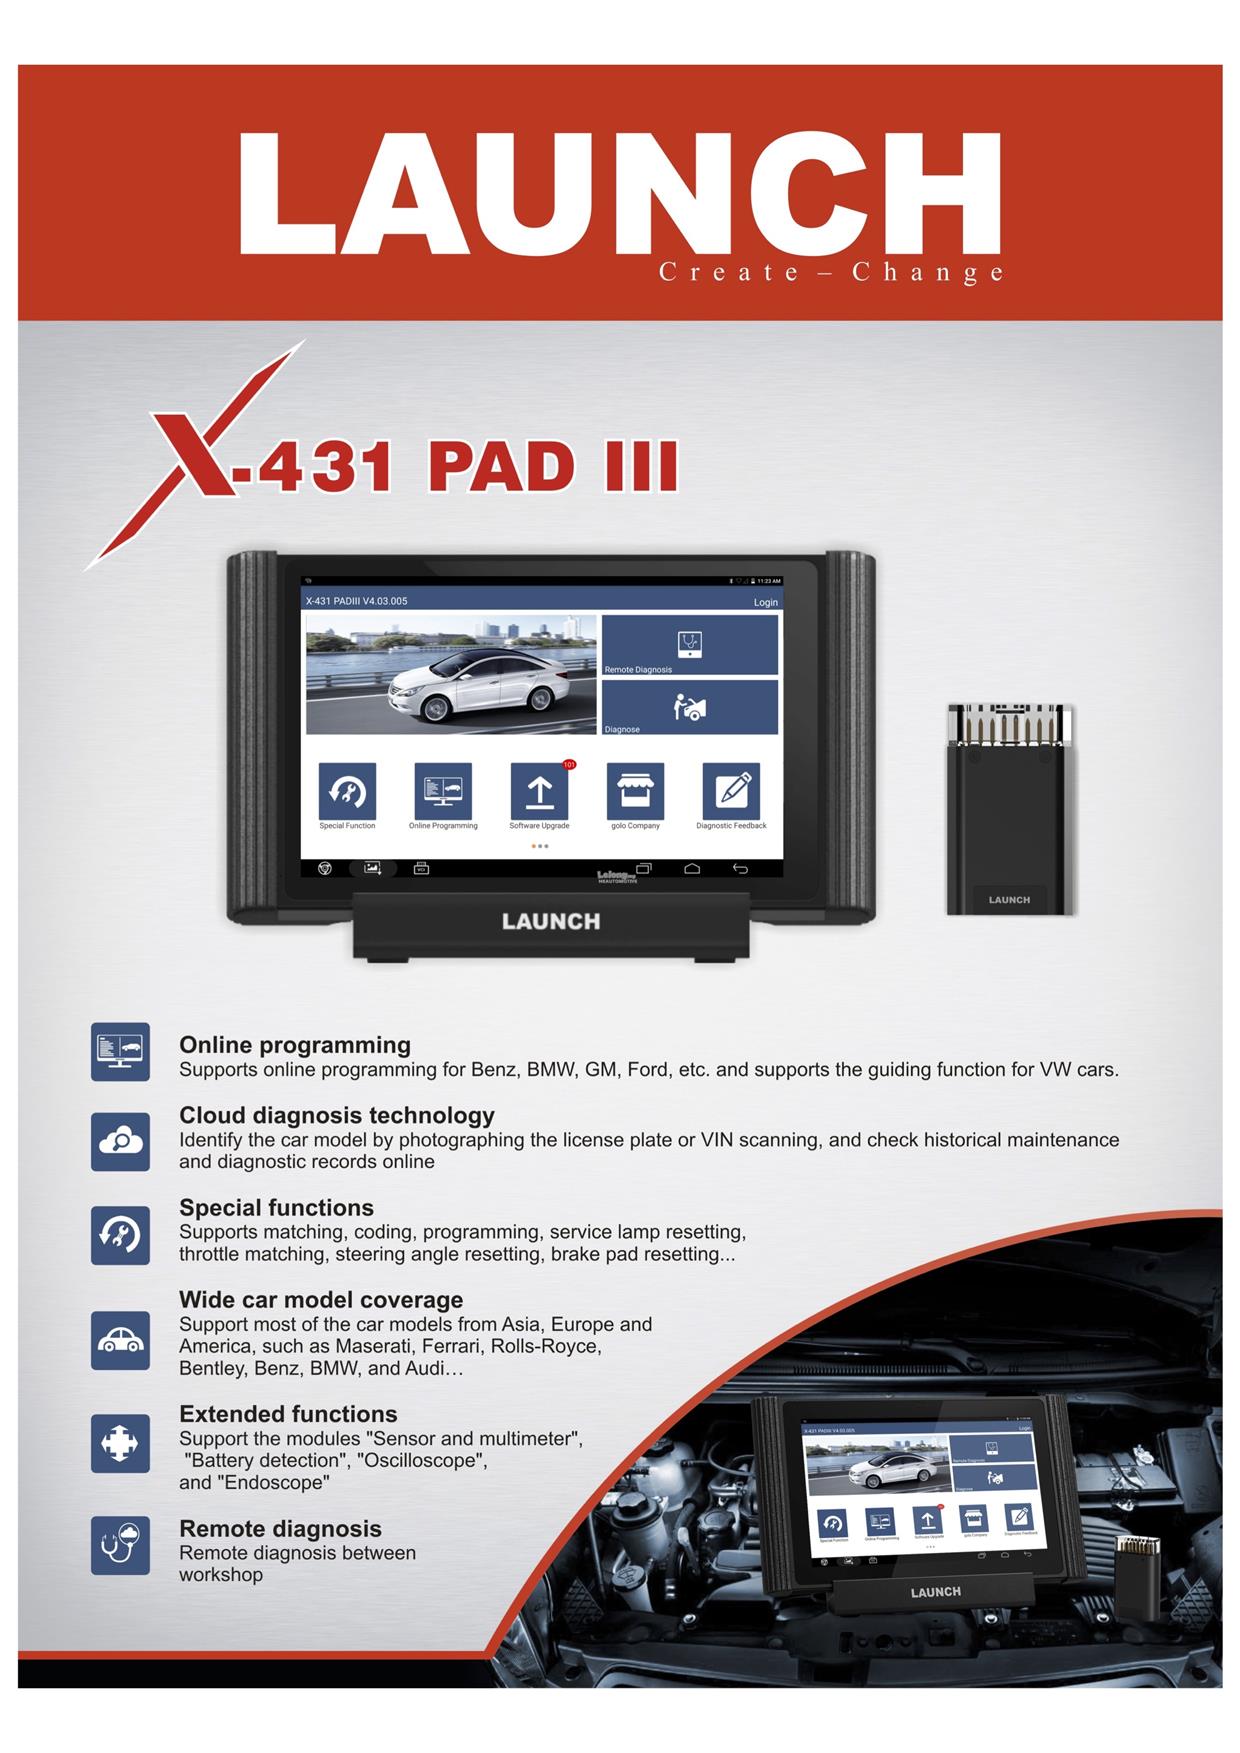 LAUNCH X-431 PAD III, Professional Scan Tool